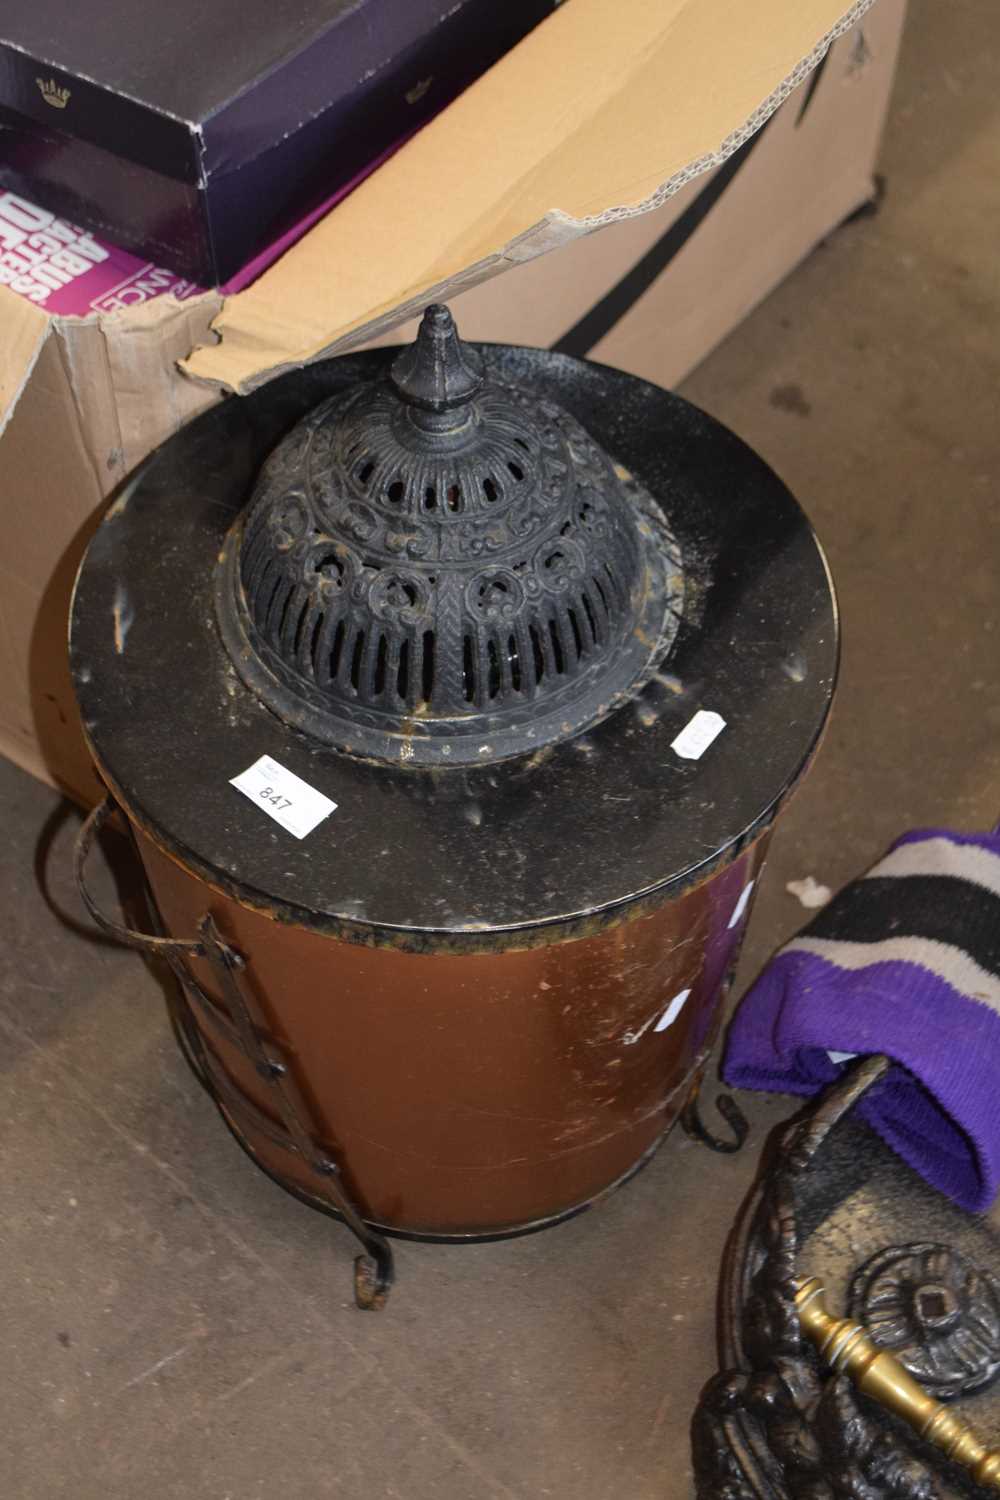 A copper coal bucket and assorted metal wares